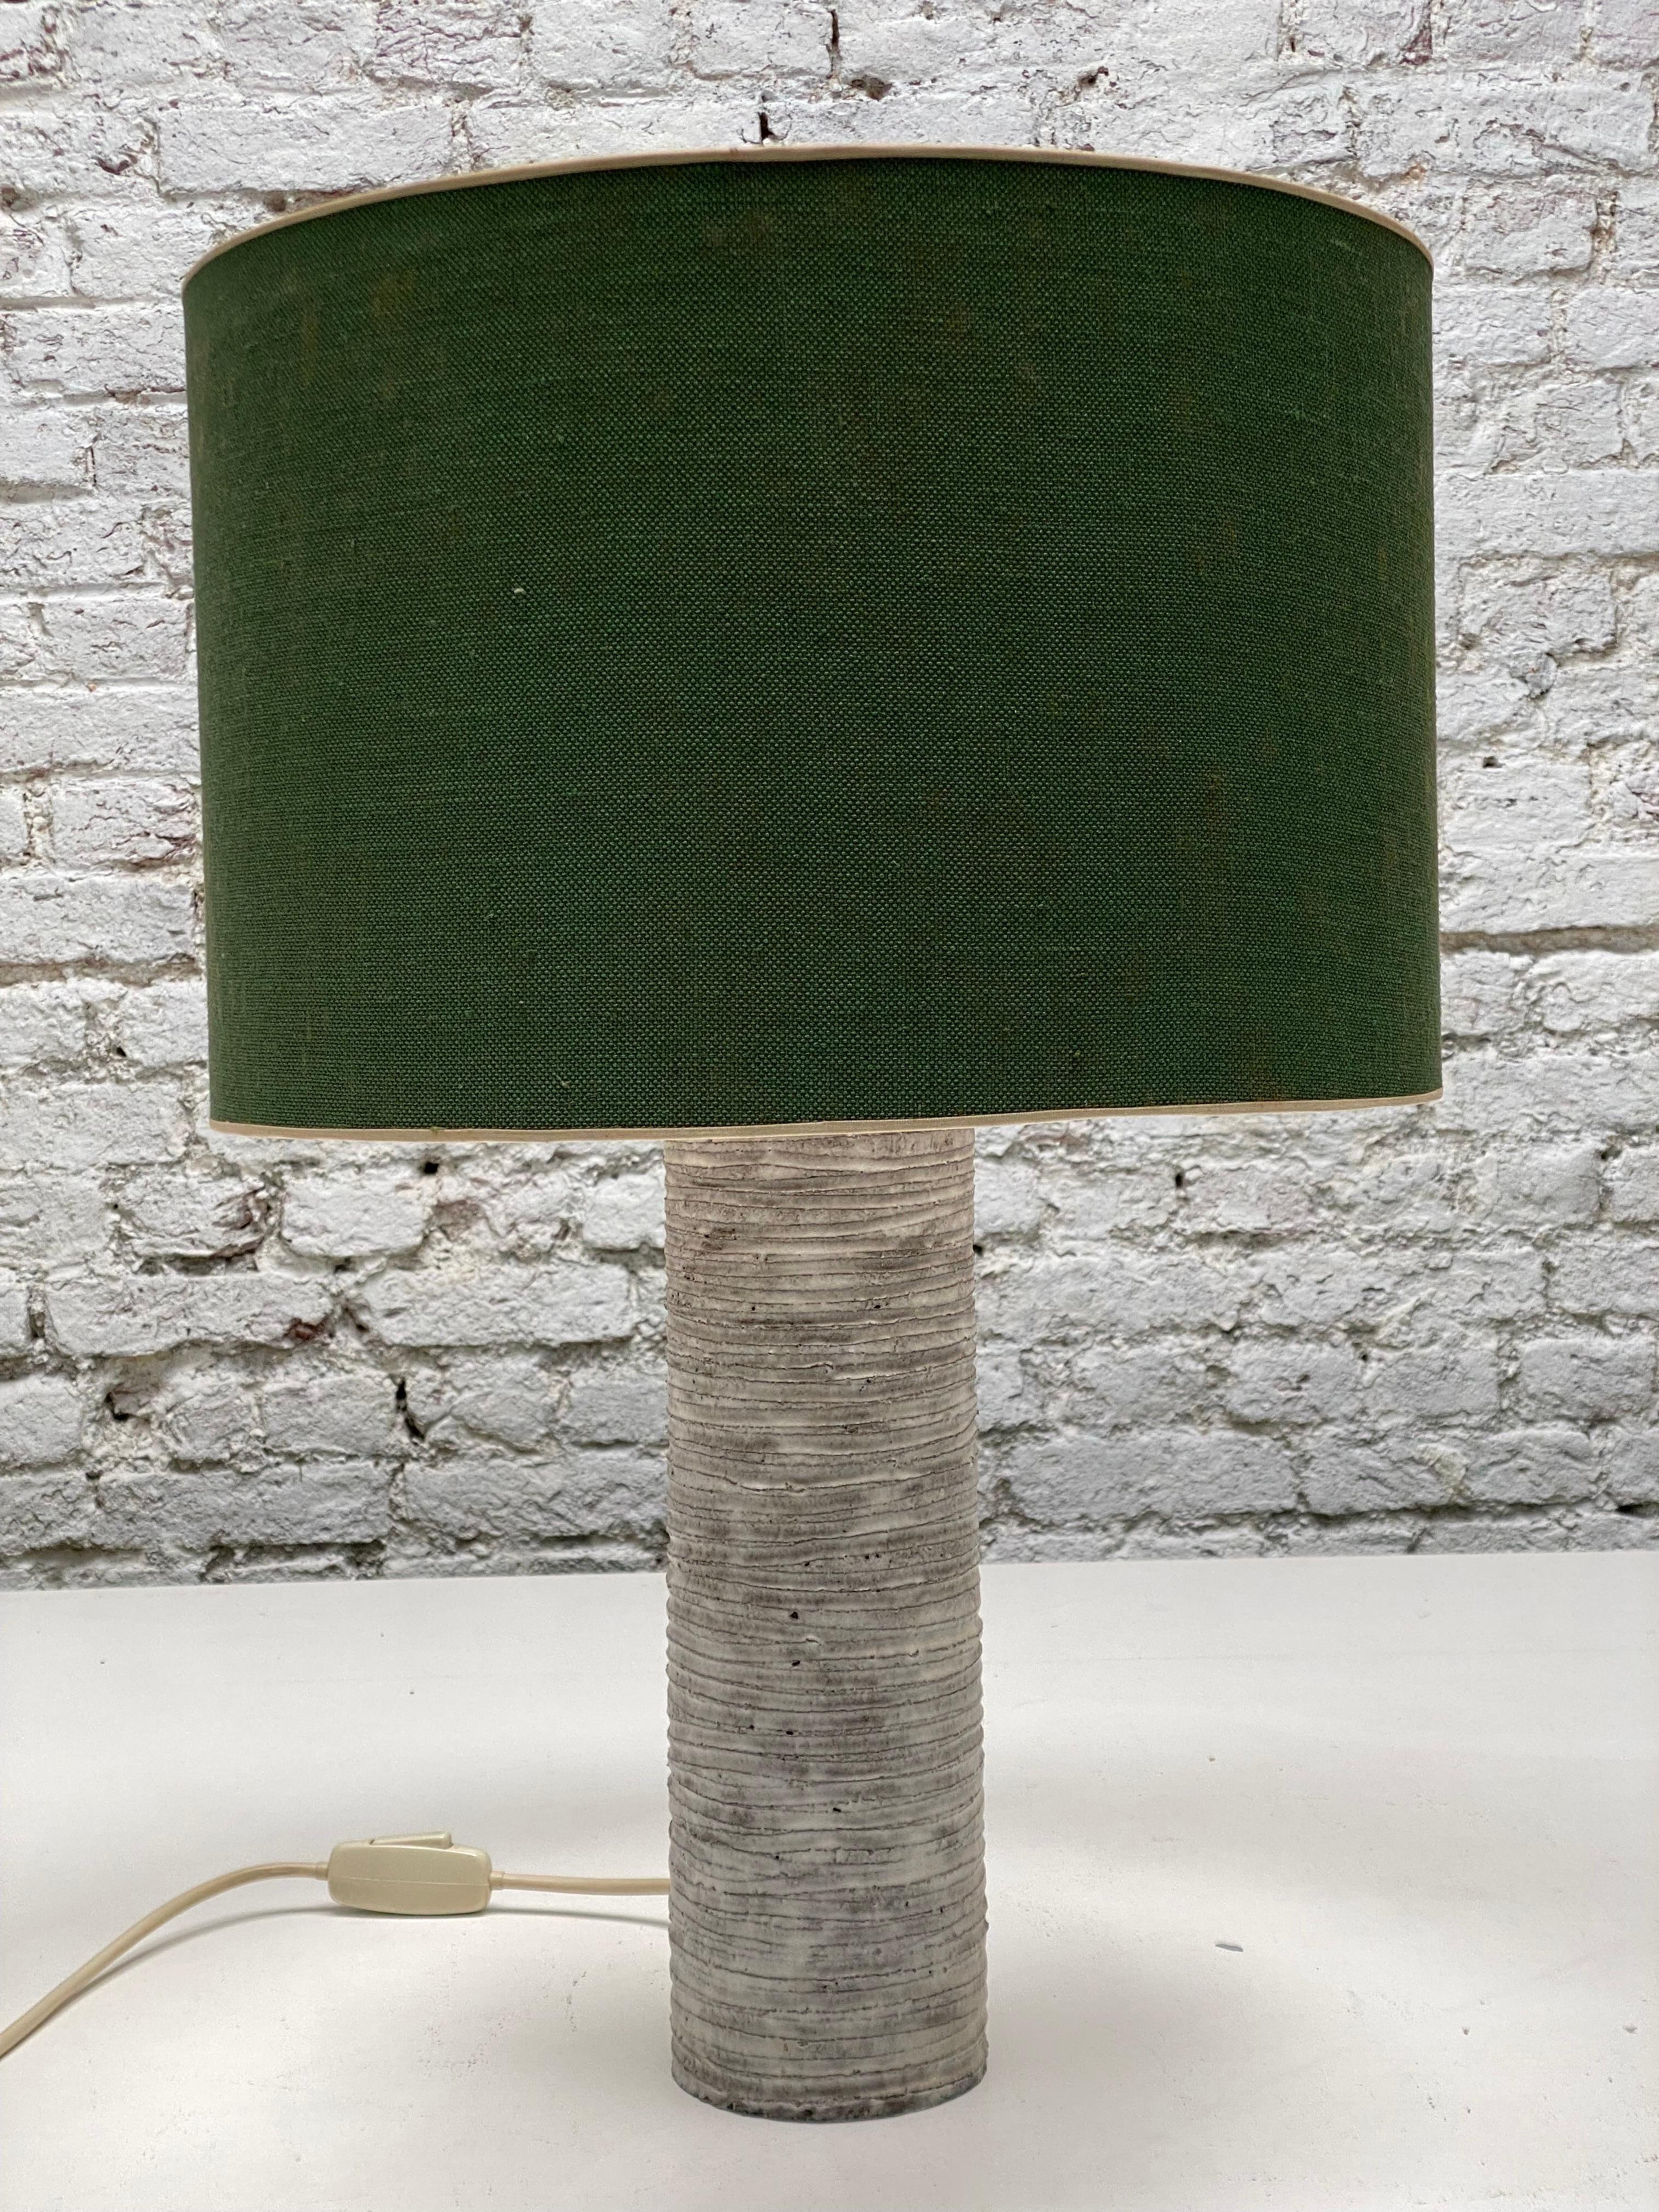 Table lamp brutalist ceramic in grey spiral tones made in Denmark original green shade. Dimensions shade 40-27 cm, Vase 53-10 cm. Height 59 cm.